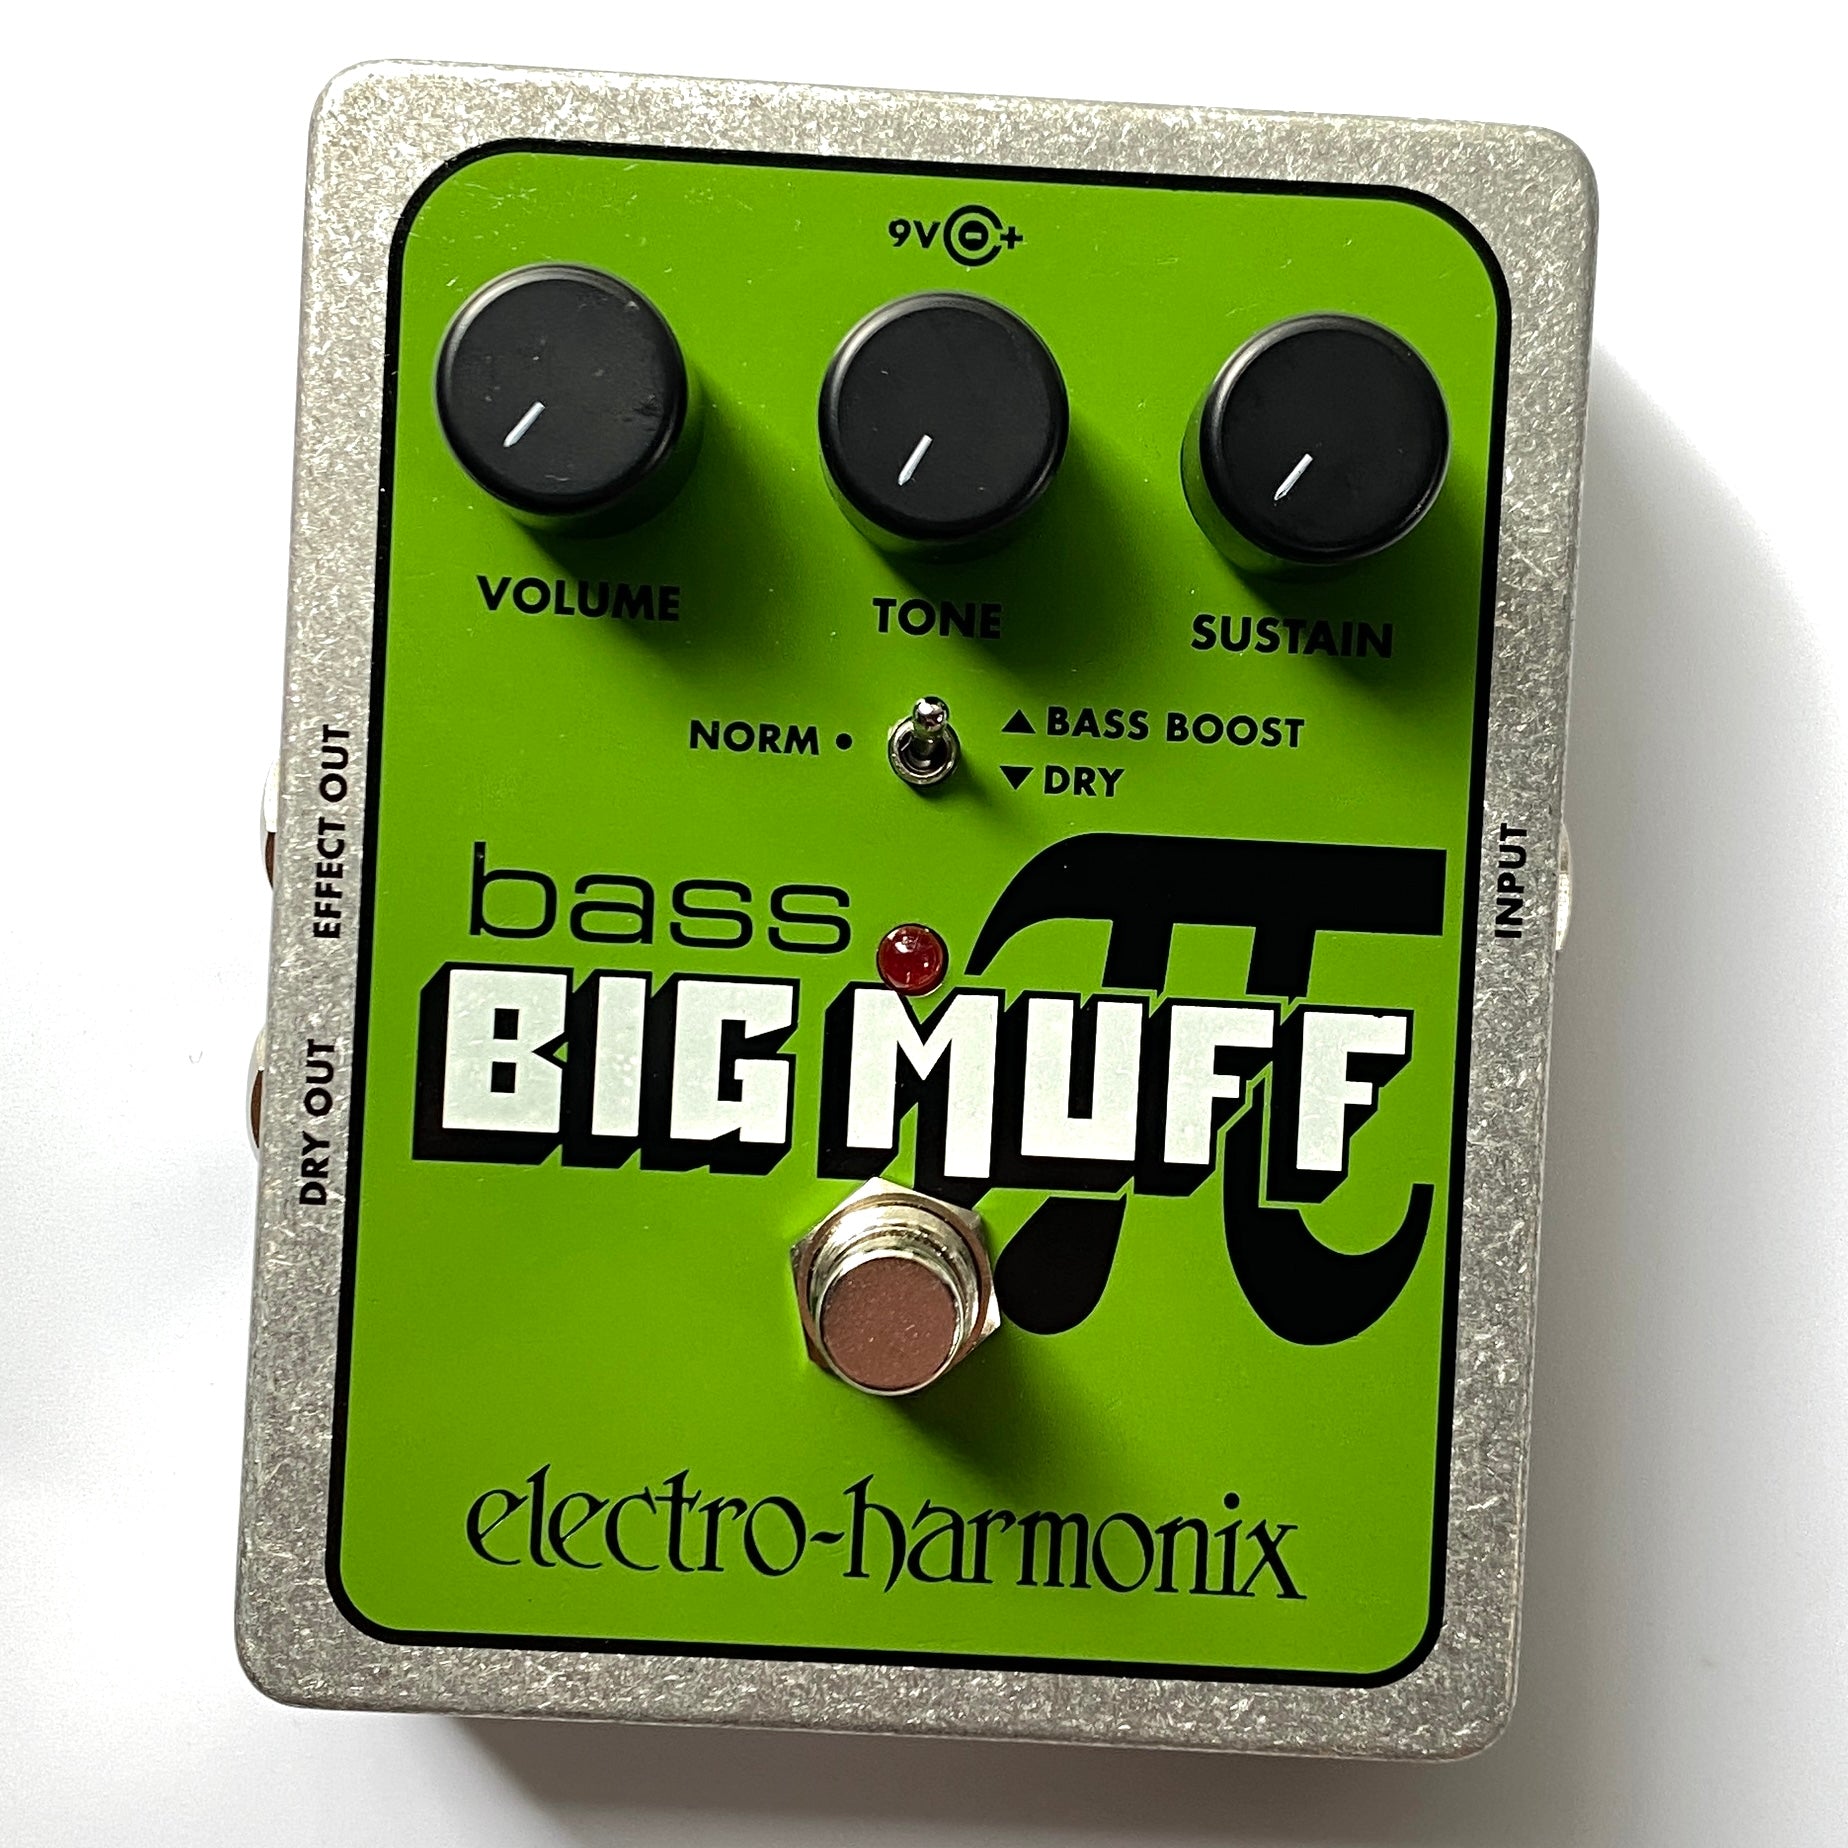 BIG MUFF electro-harmonic